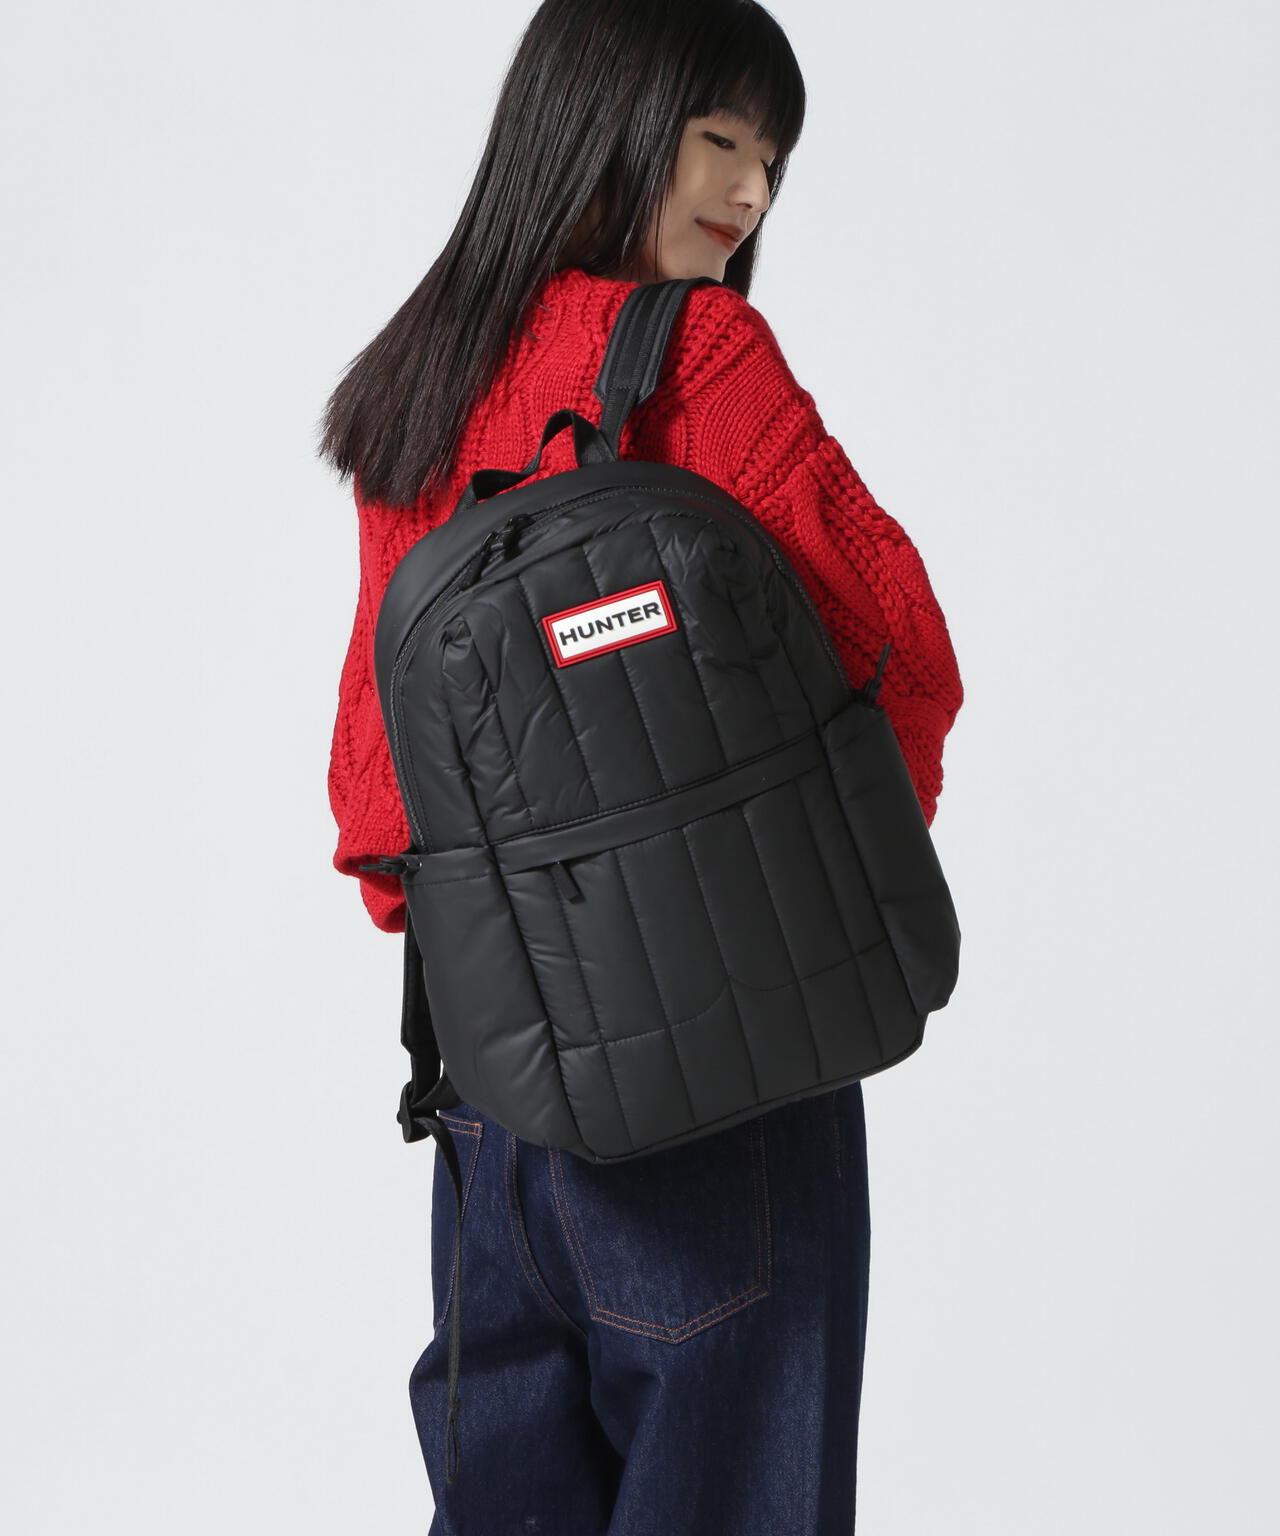 HUNTER(ハンター) intrepid puffer large backpack/バックパック | B 